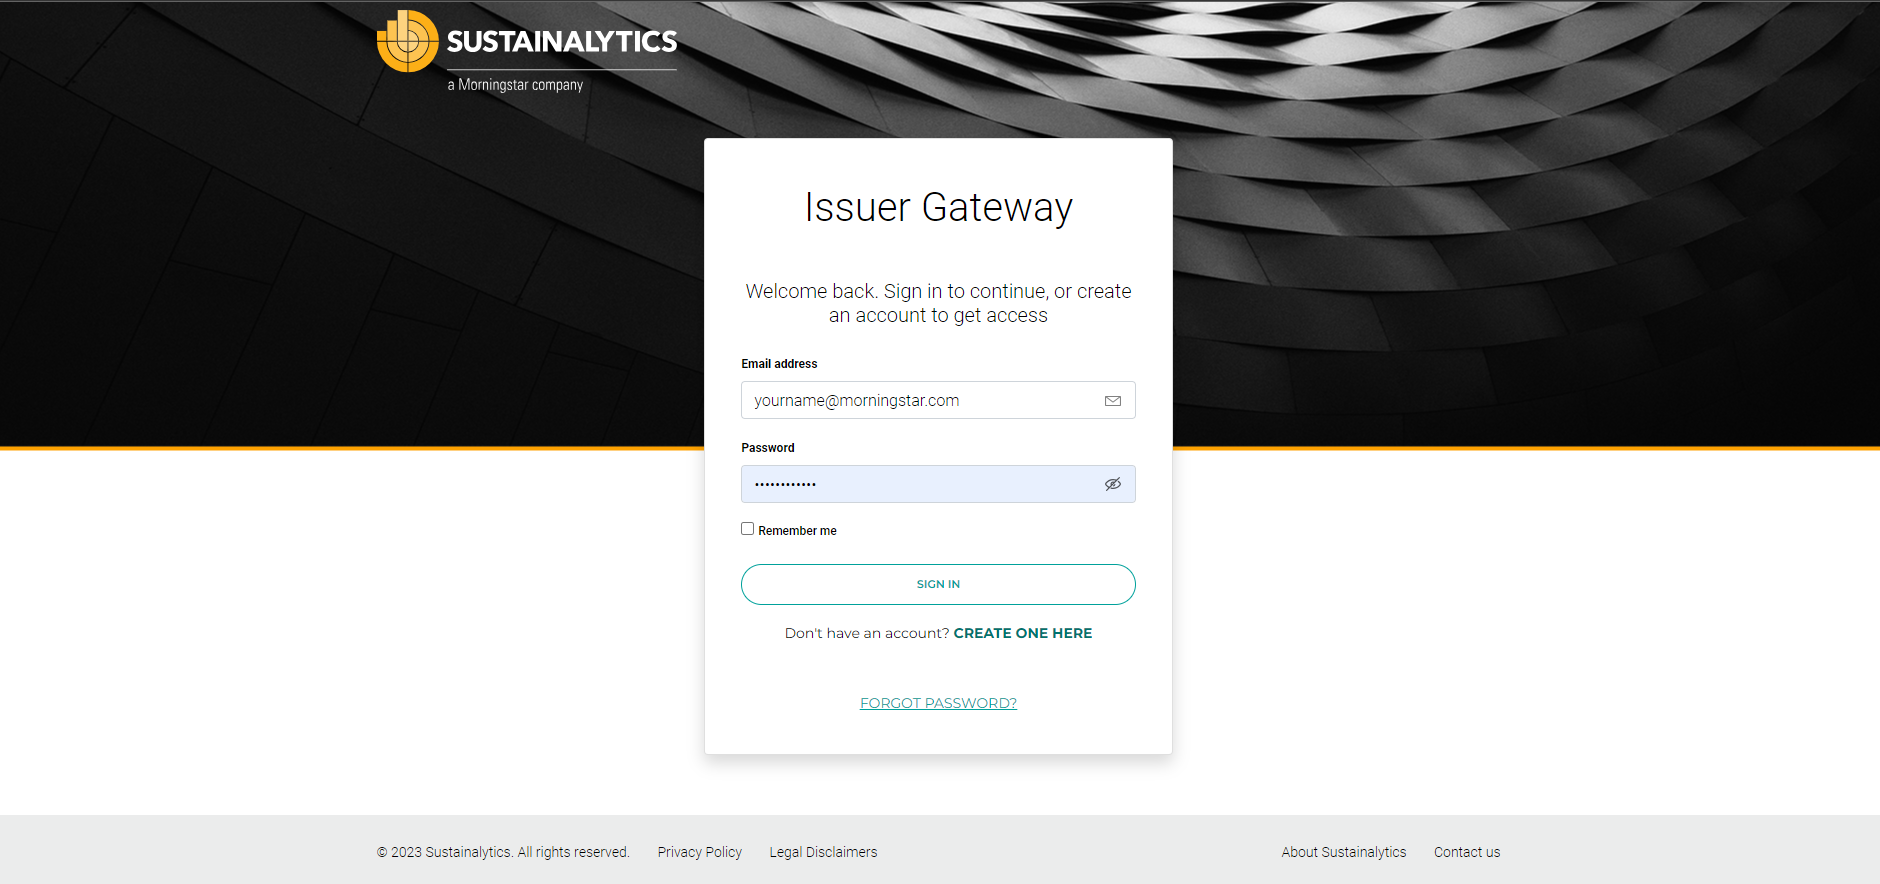 Issuer Gateway Login Page